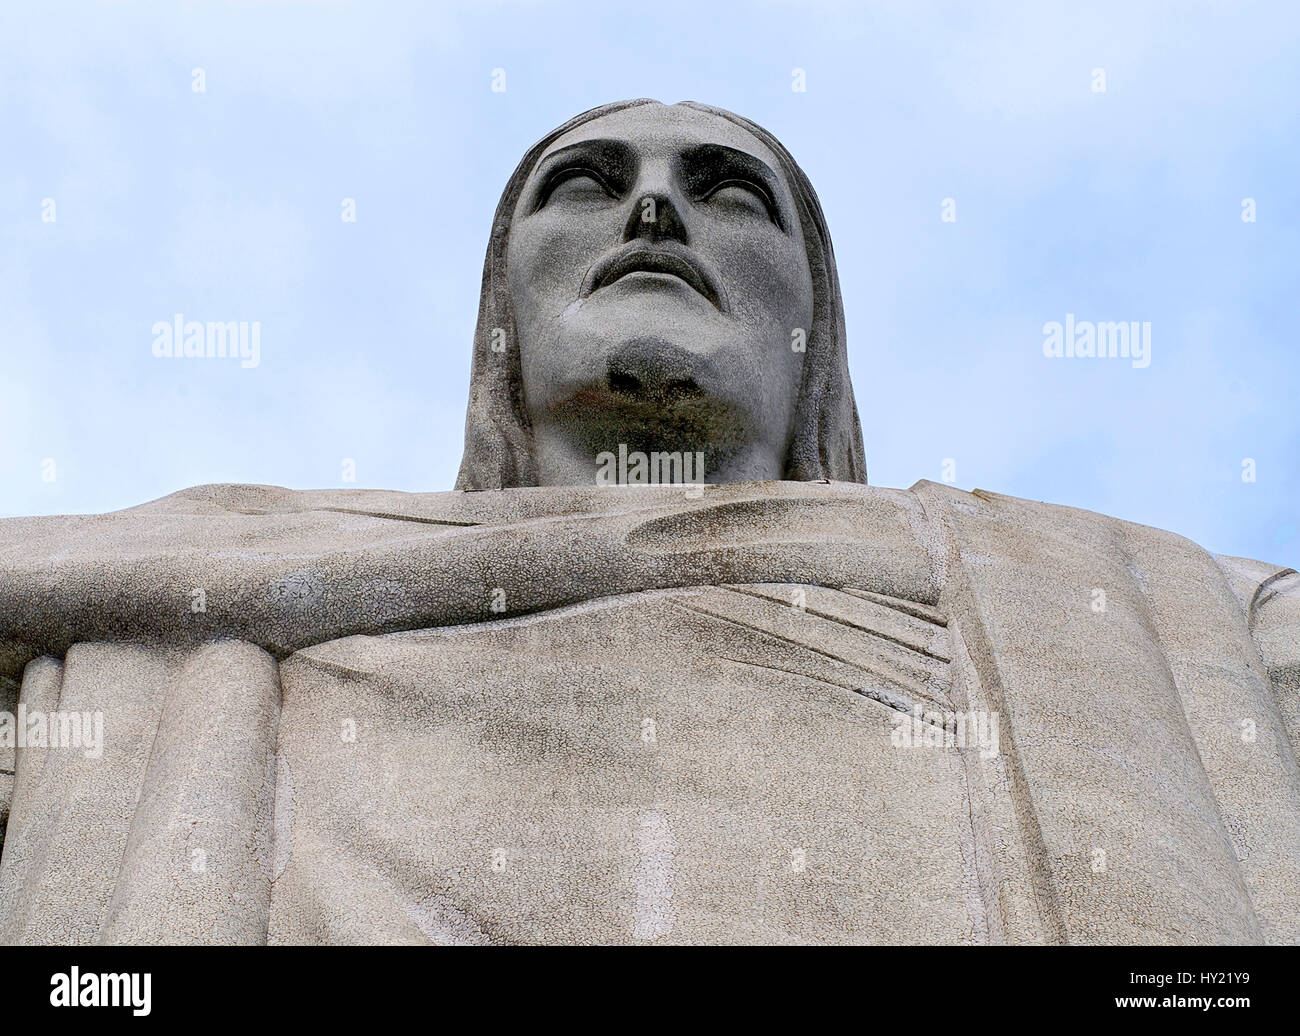 Detail Image of the Corcovado Jesus Statue in Rio de Janeiro, Brazil. Stock Photo